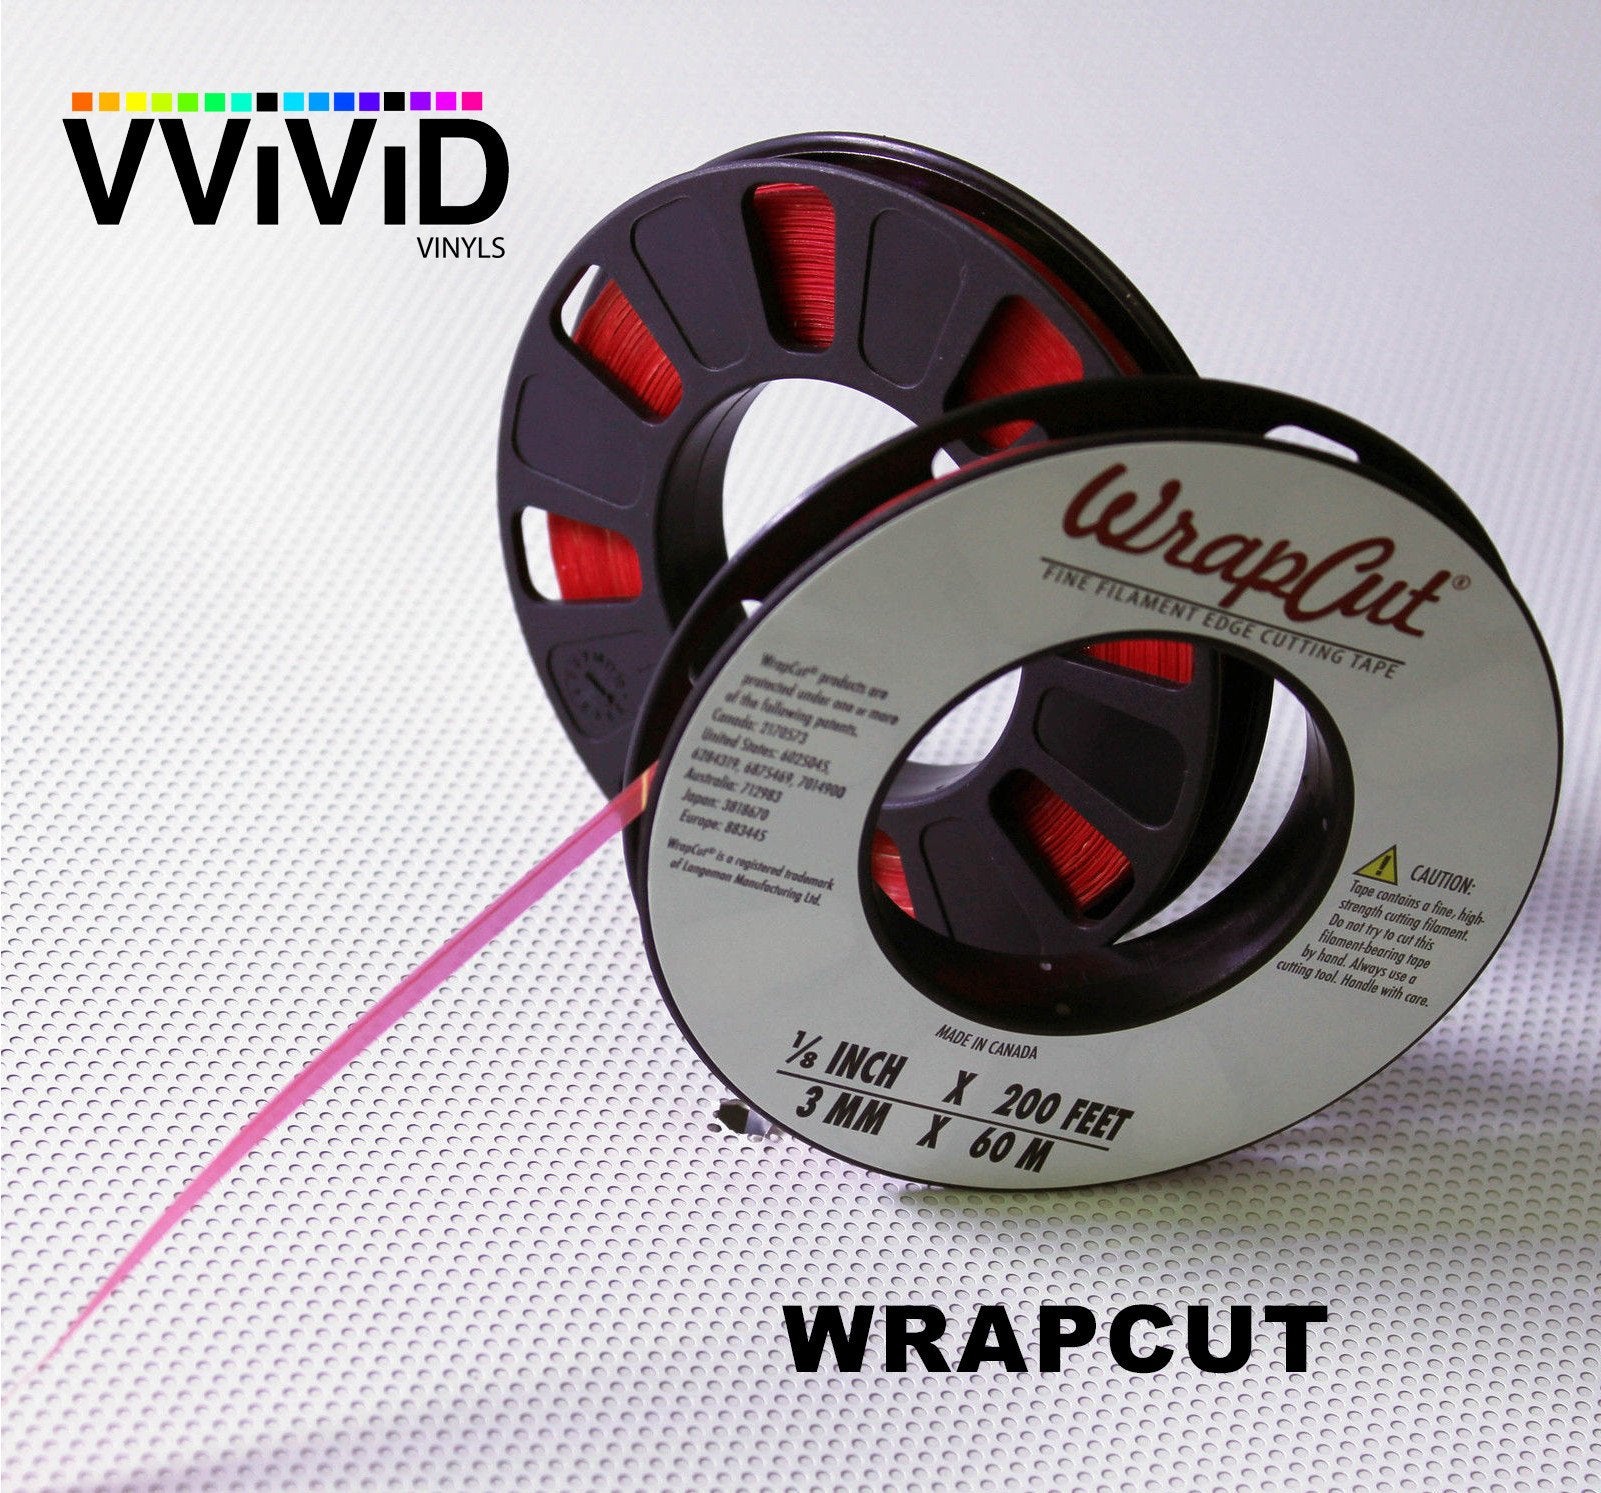 WrapCut - The VViViD Vinyl Wrap Shop